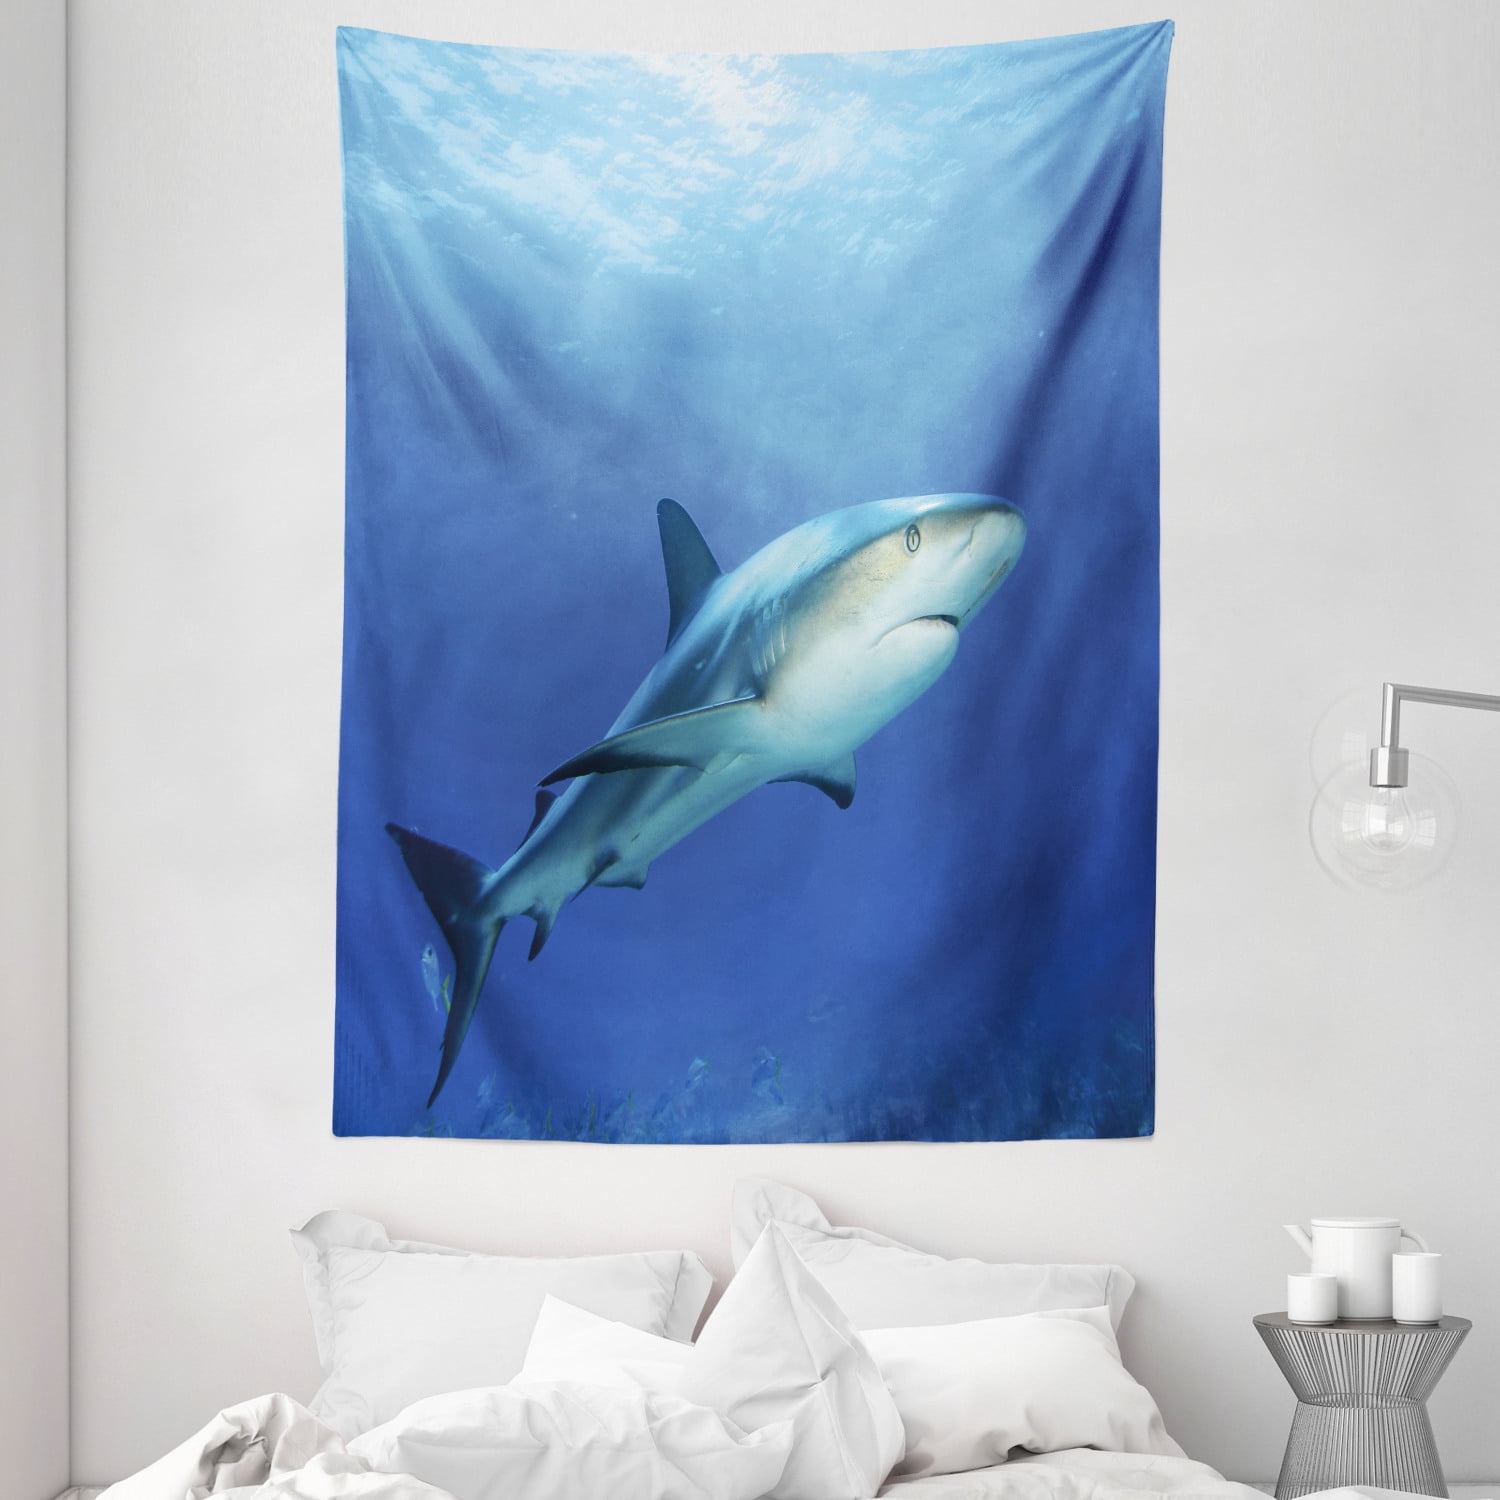 Water Living RoomBedroom Wall Art Sea Marine Life Home Decor Ocean Printable Poster Abstract Shark Digital Print Silhouette